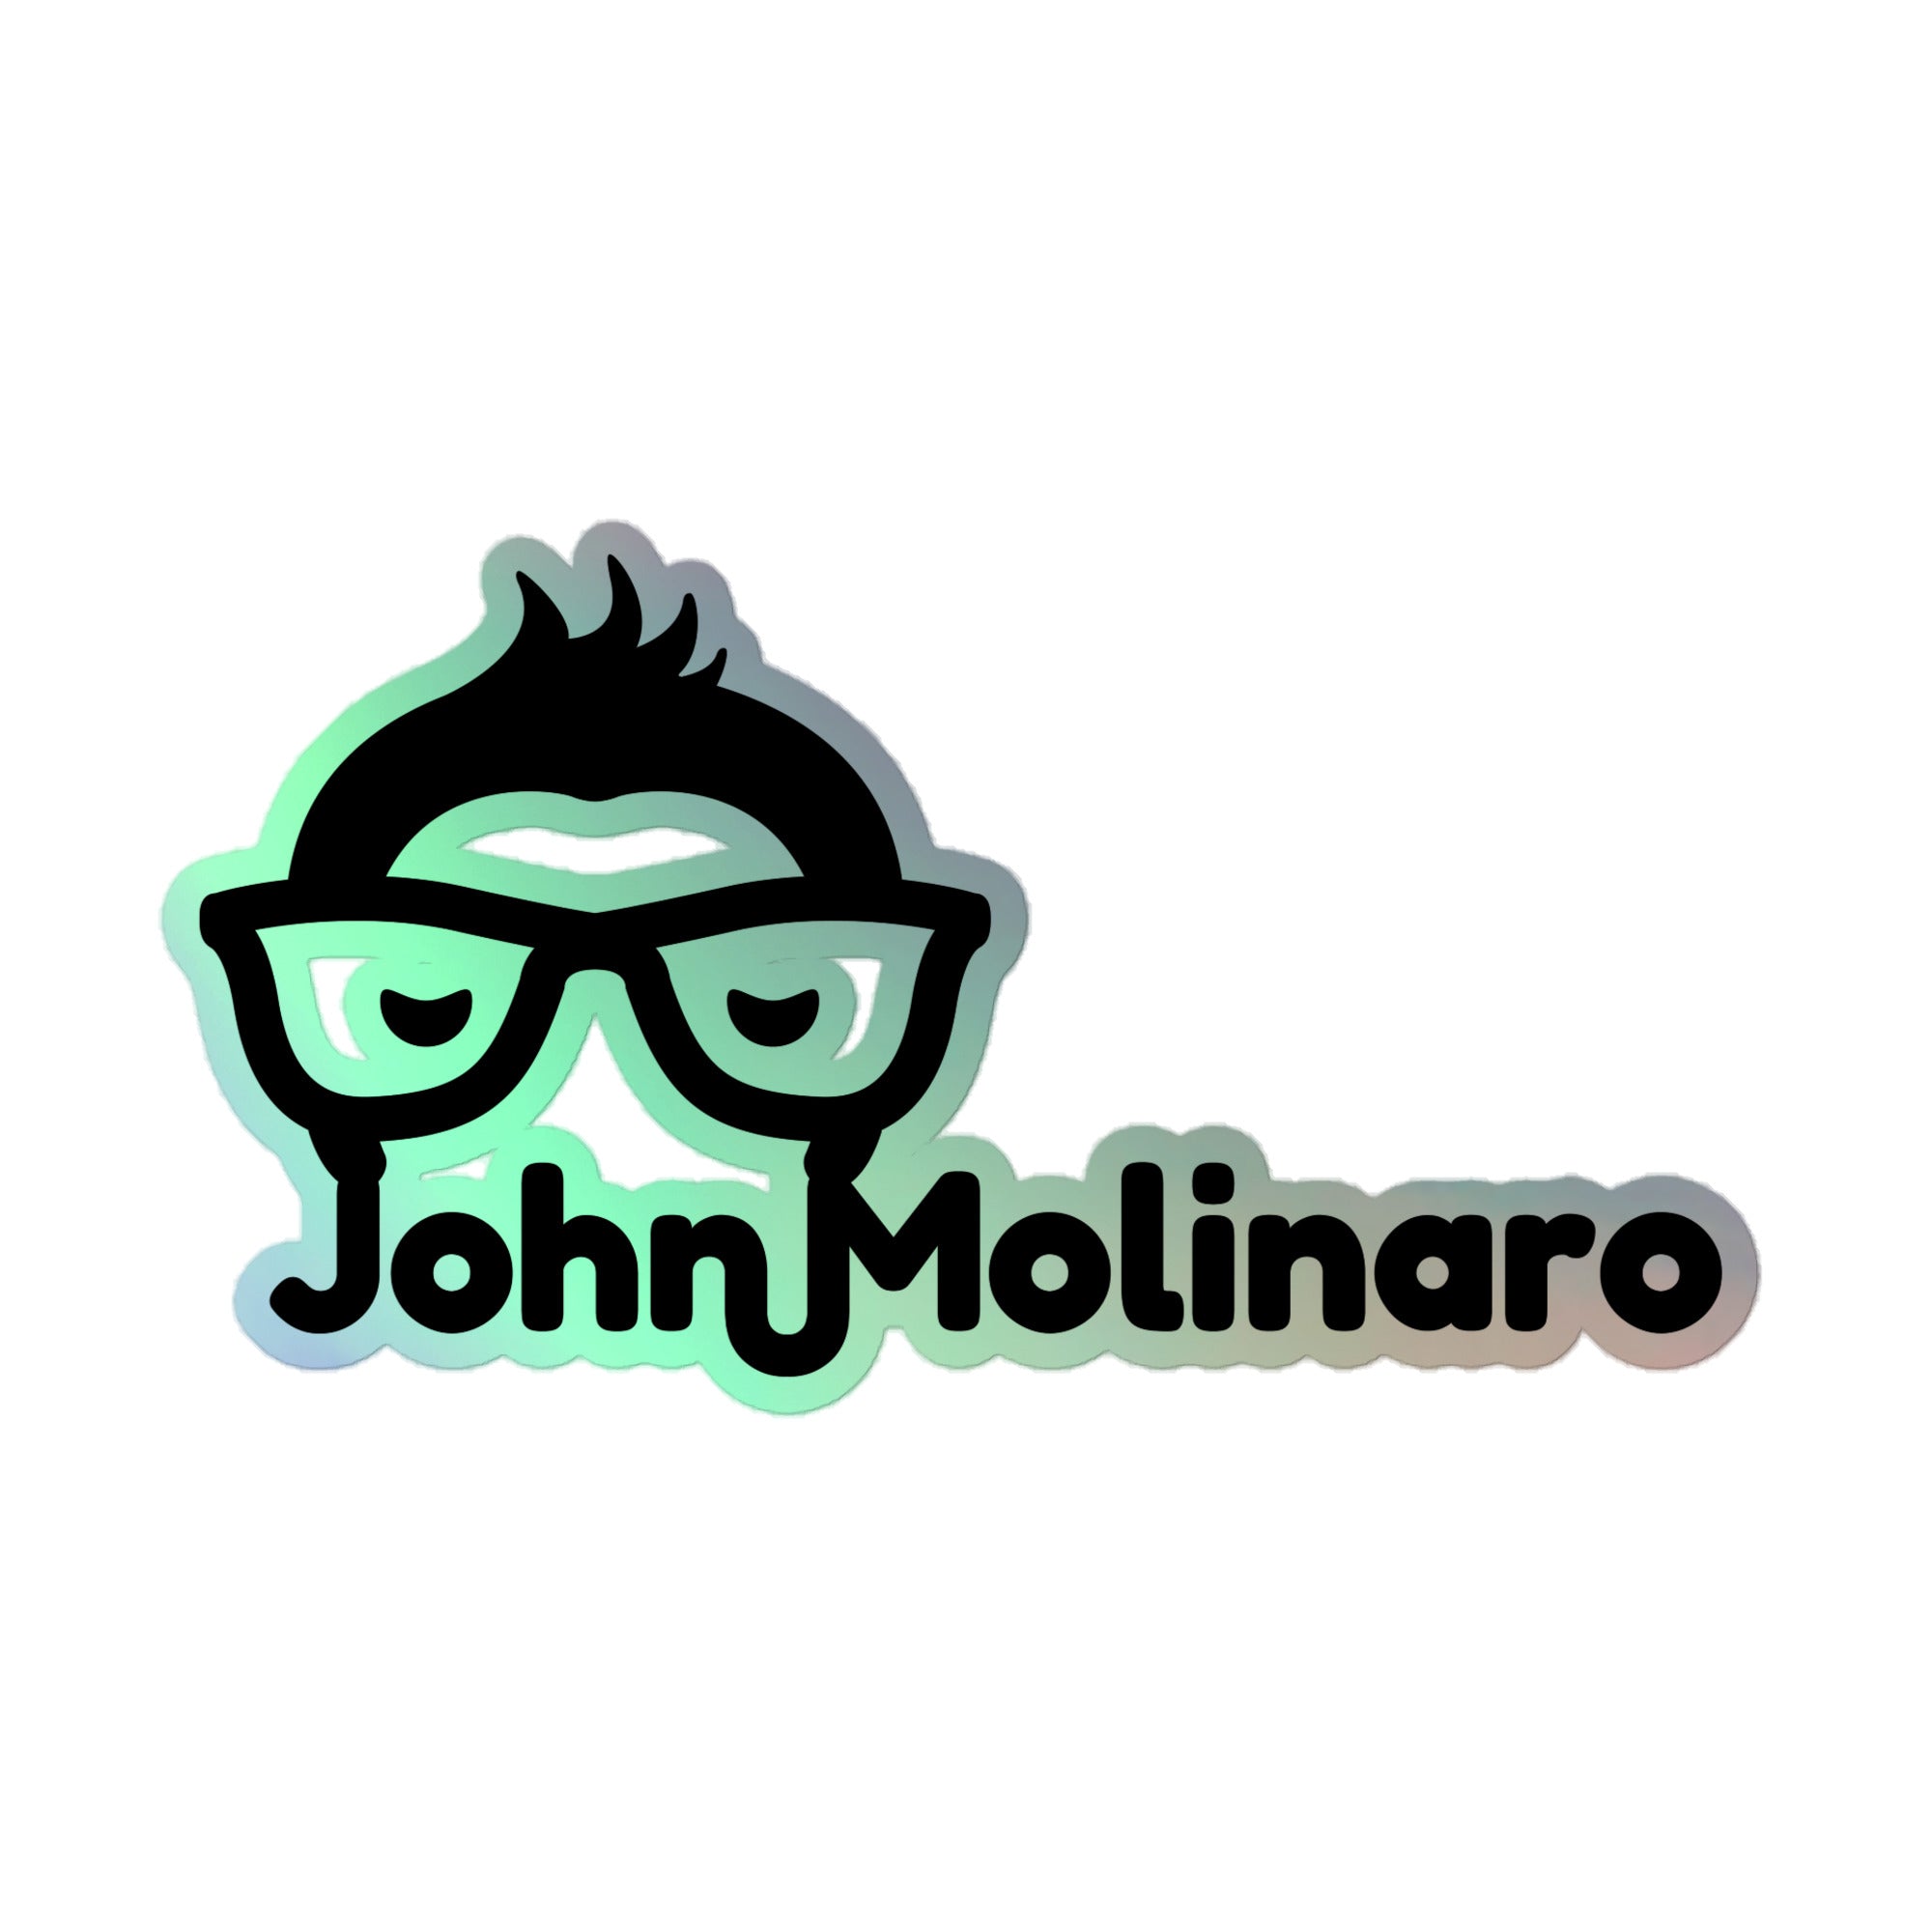 John Molinaro - Holographic stickers